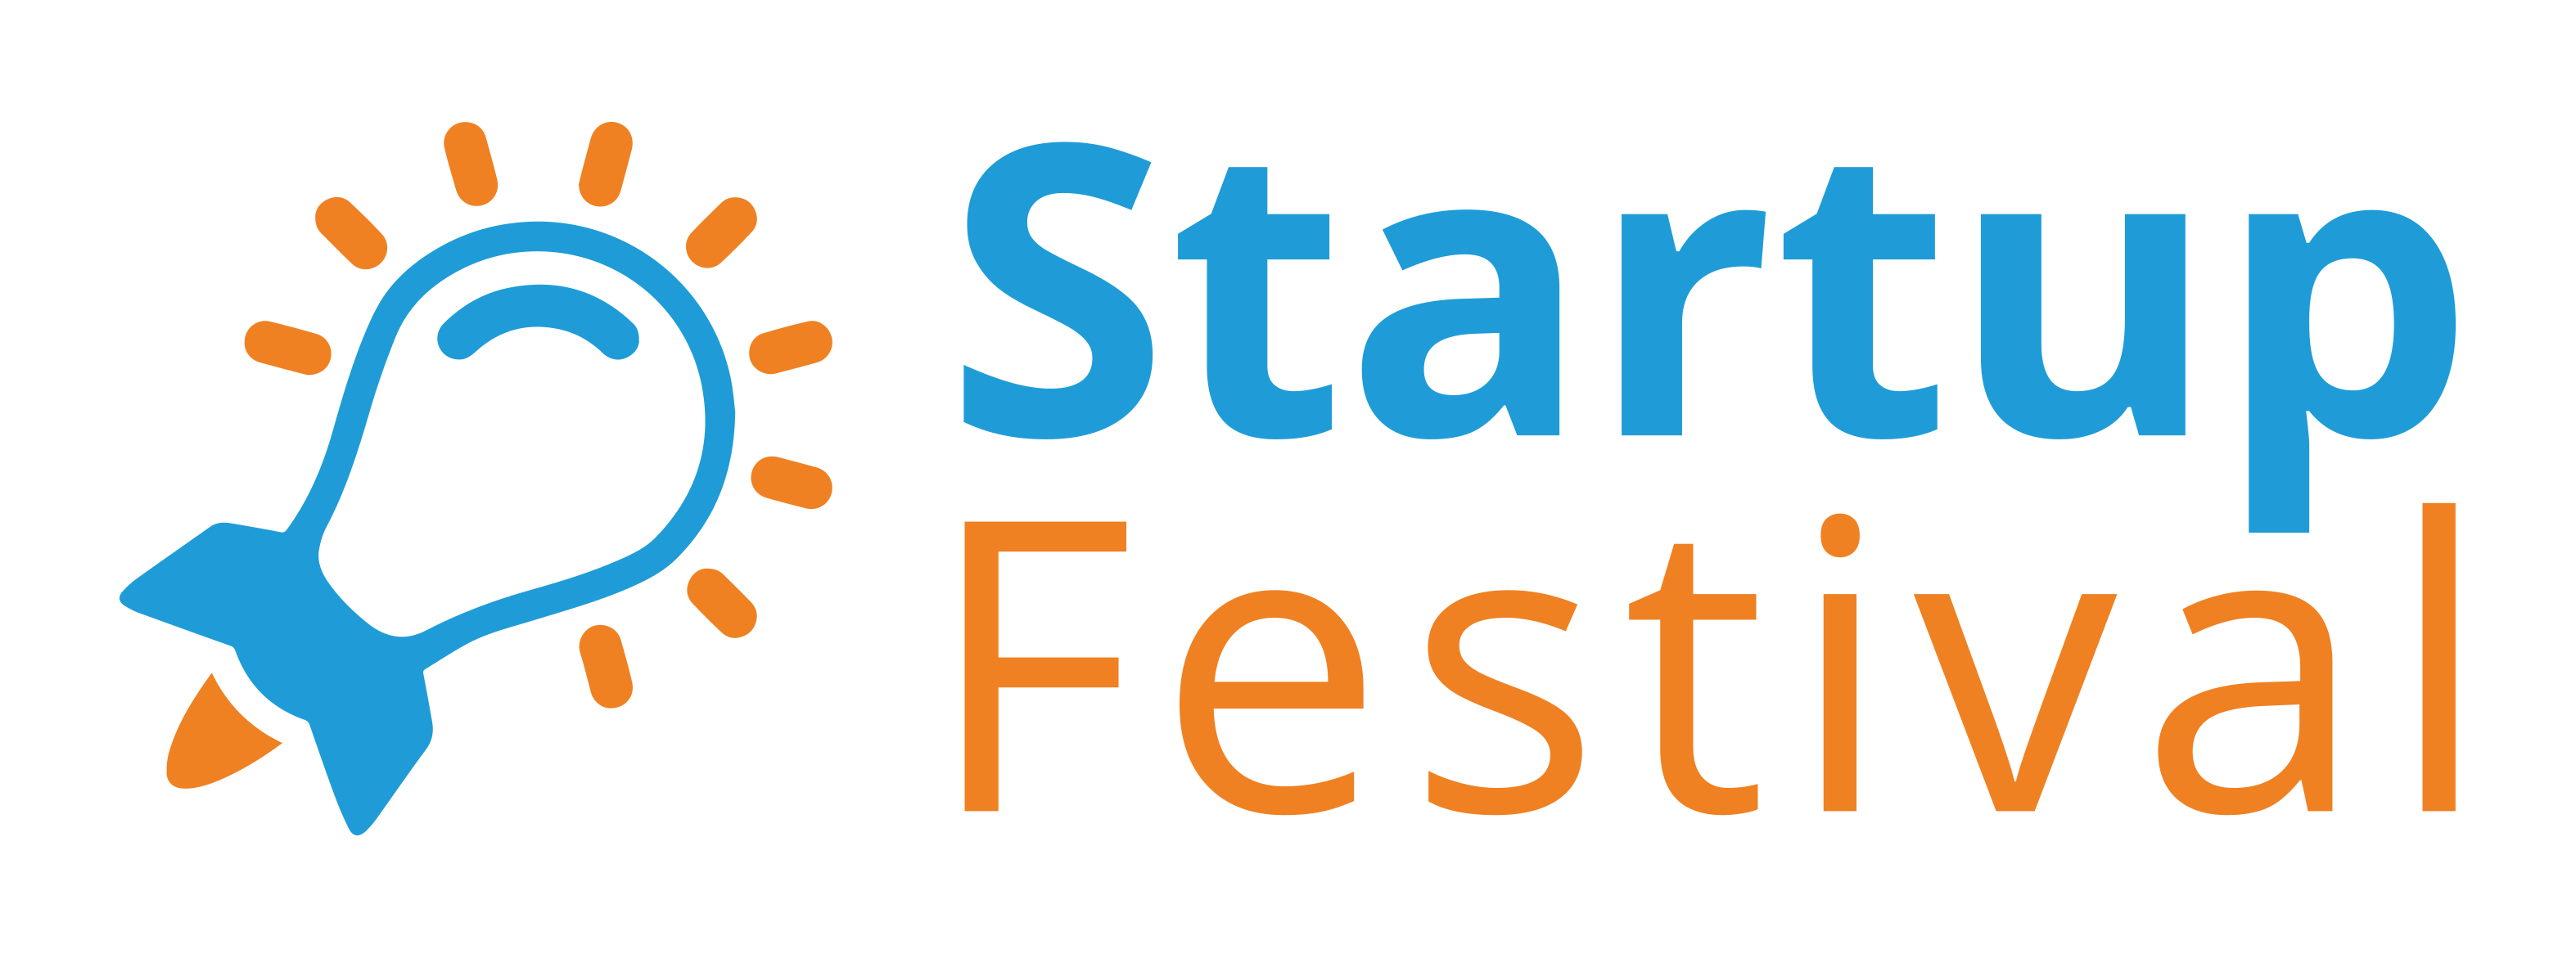 StartUPfestival_logo_final